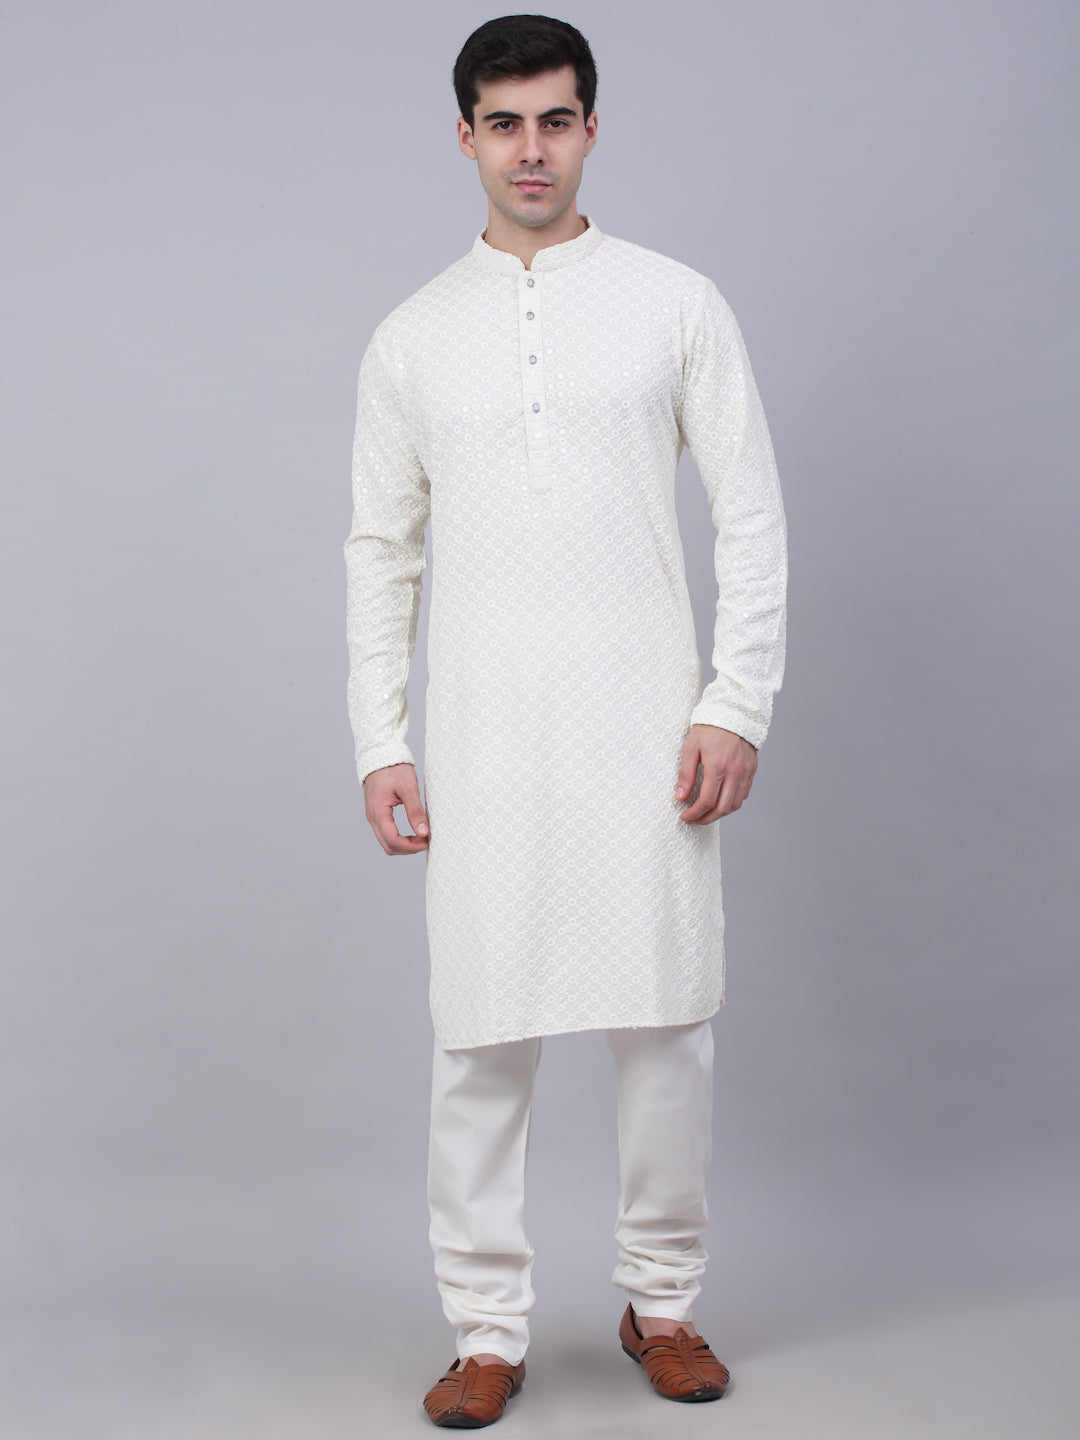 Buy Cream & White 2-Piece Ethnic Suit for Men by JOMPERS Online | Ajio.com